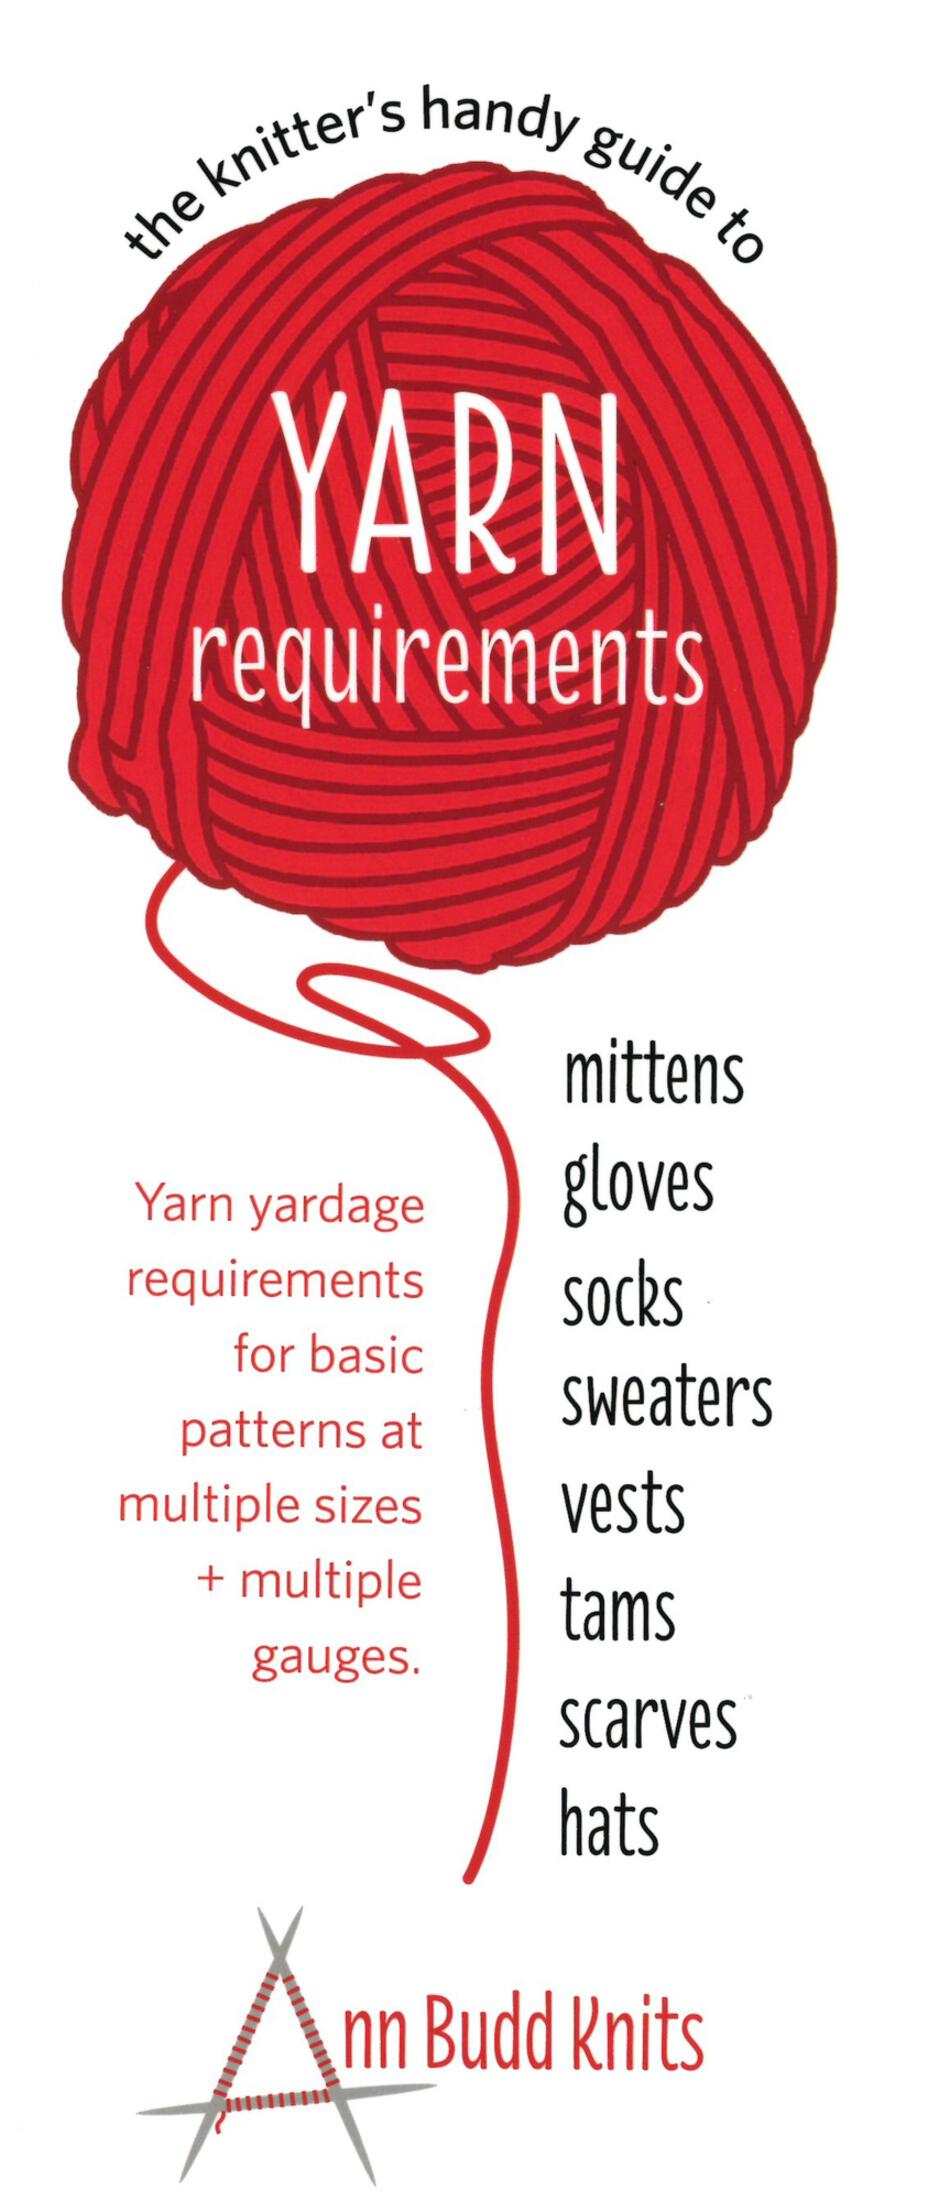 Knitting Books Knitteraposs Handy Guide to Yarn Requirements